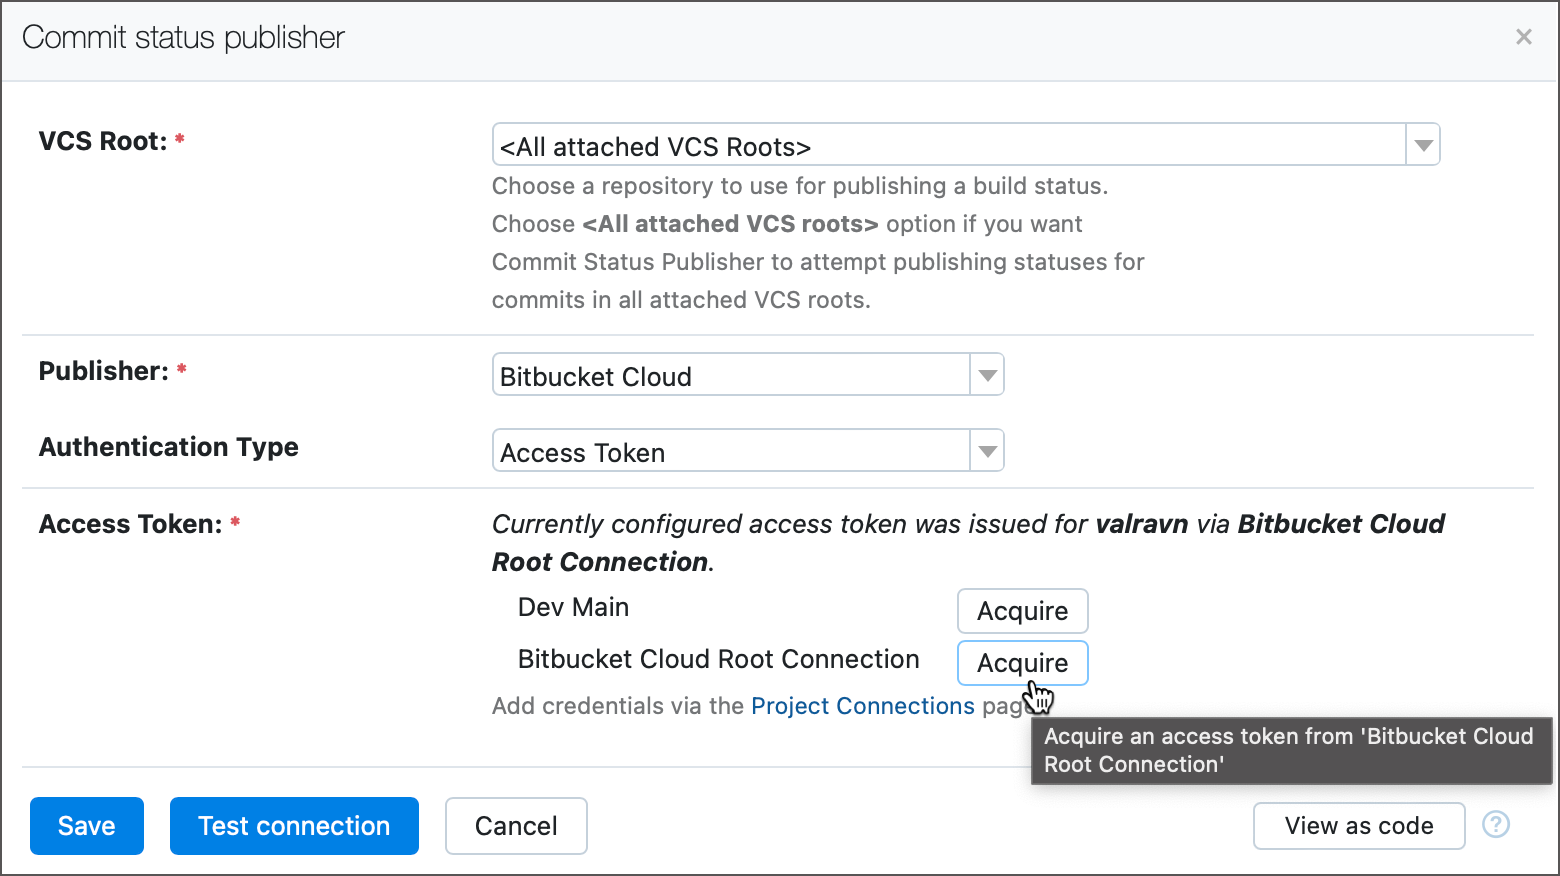 Acquire access token for Bitbucket Cloud